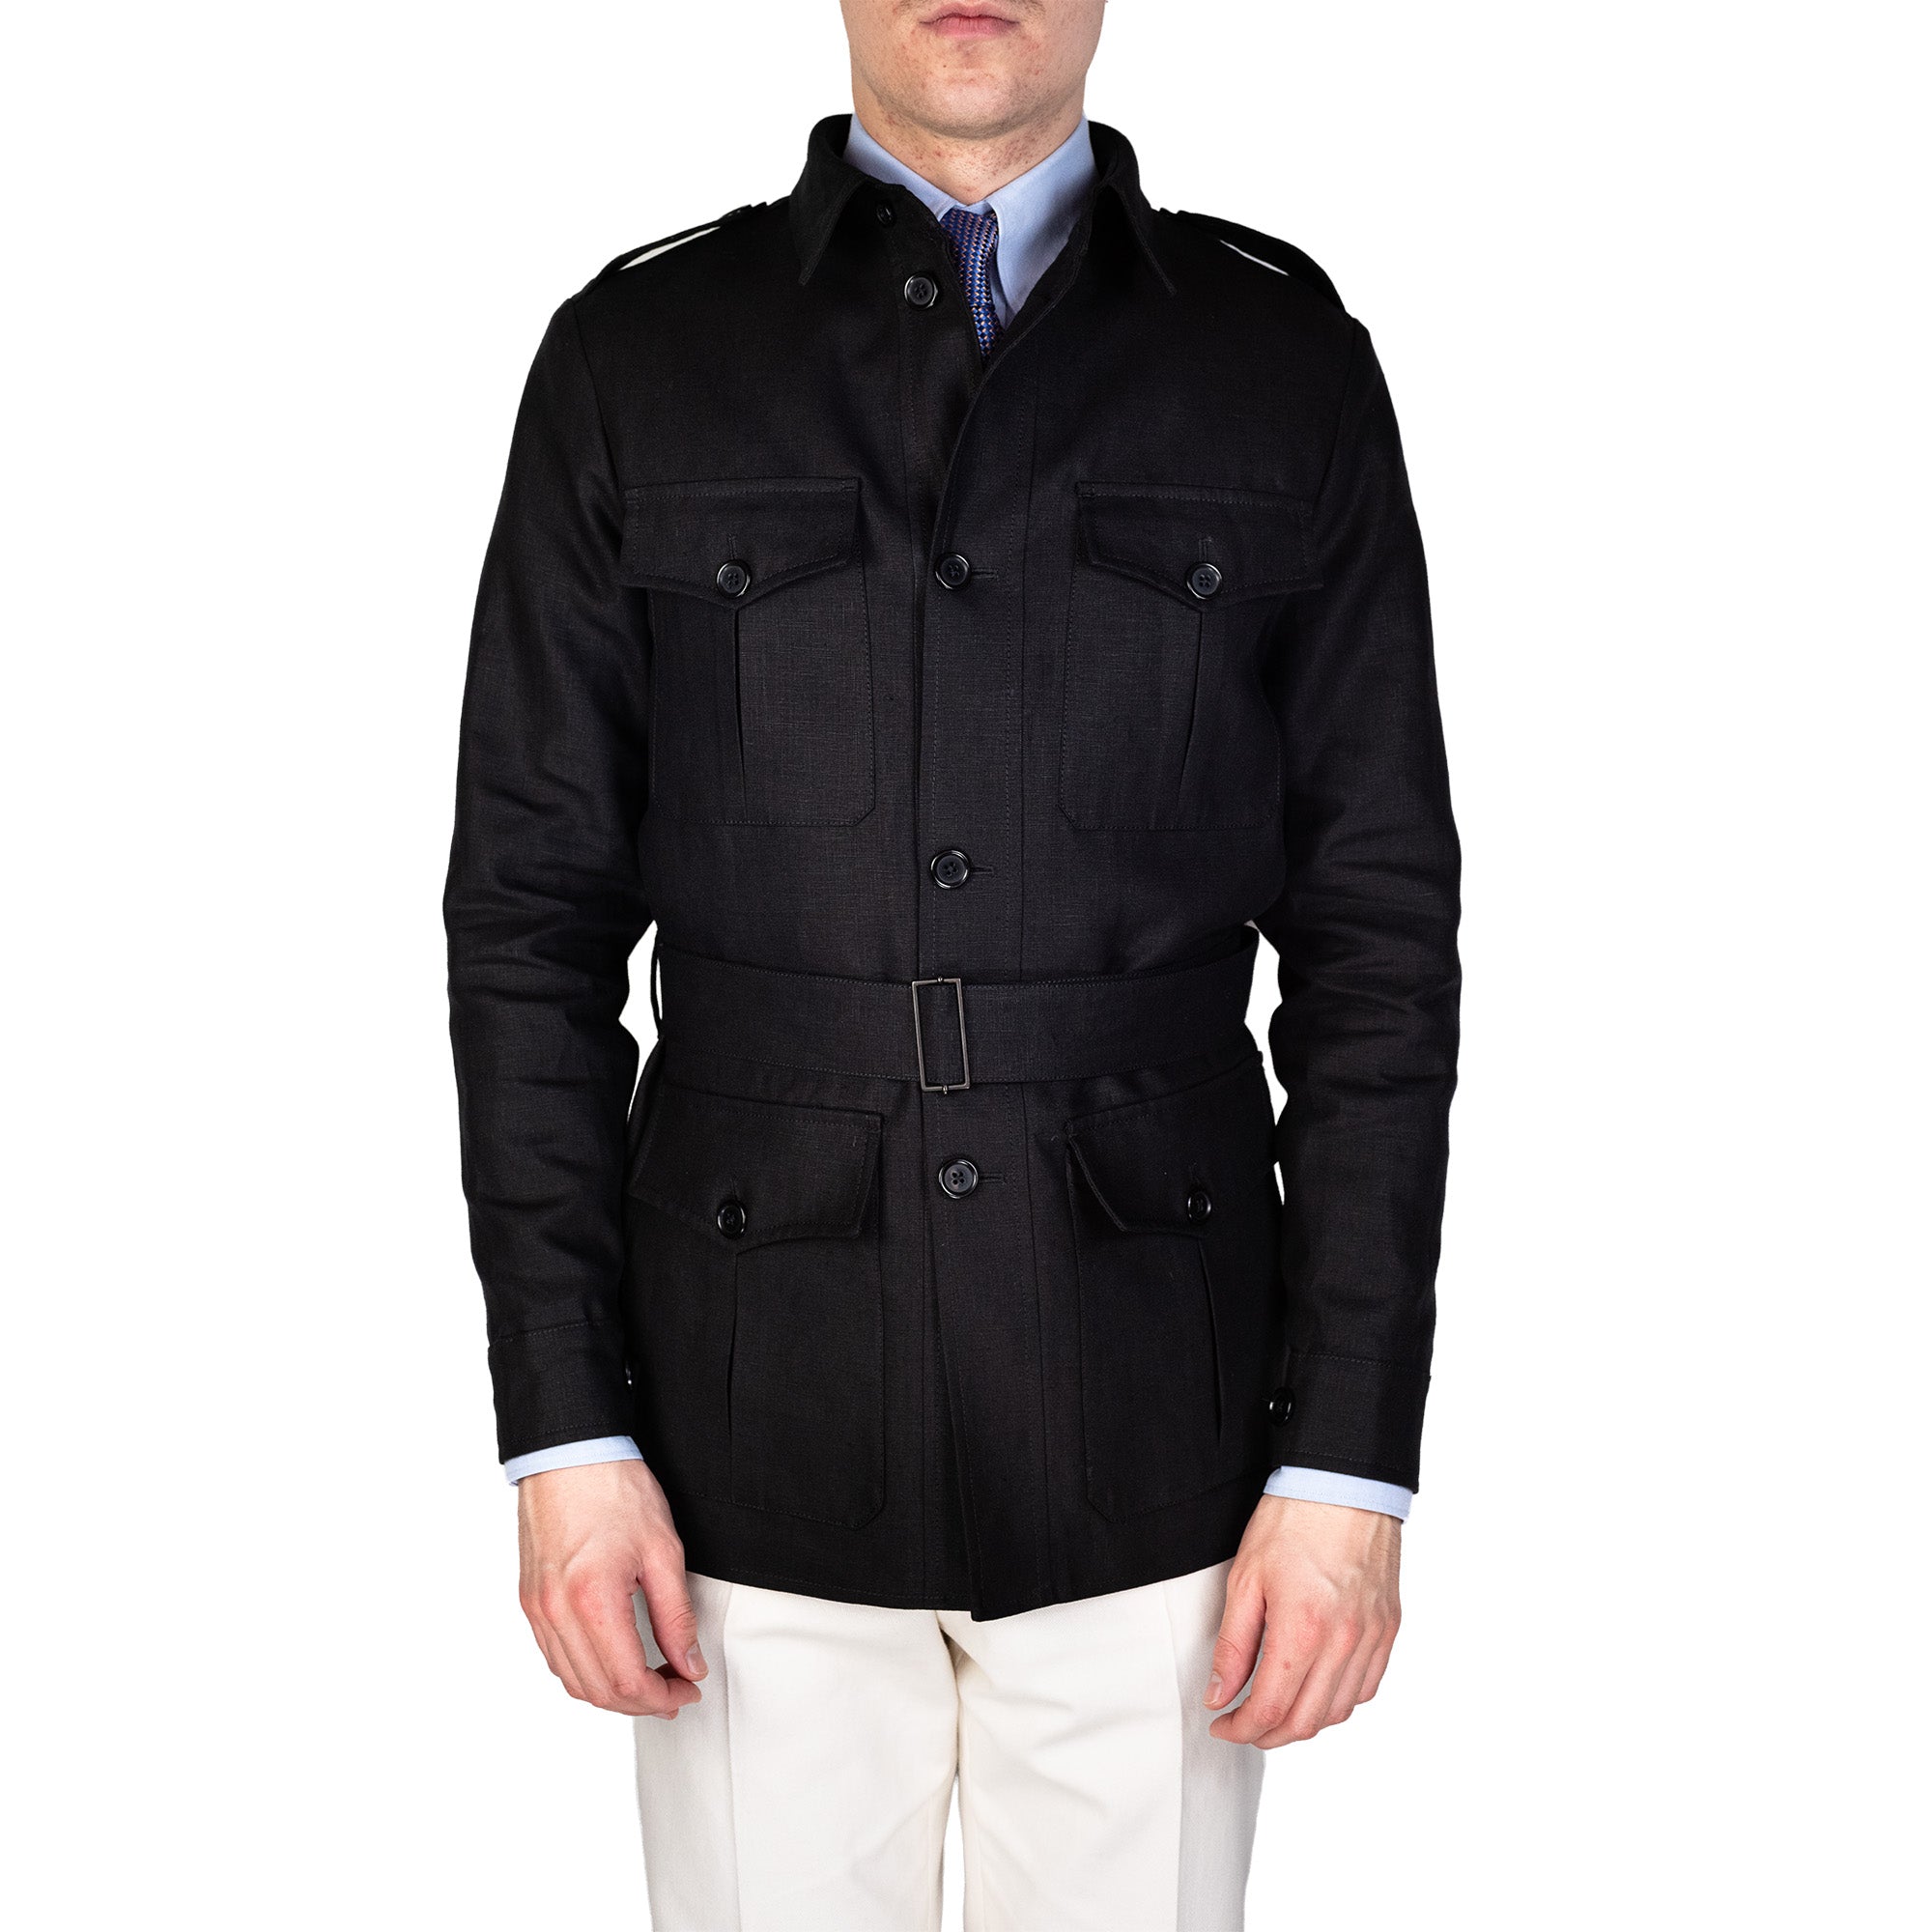 Safari jacket - Black linen